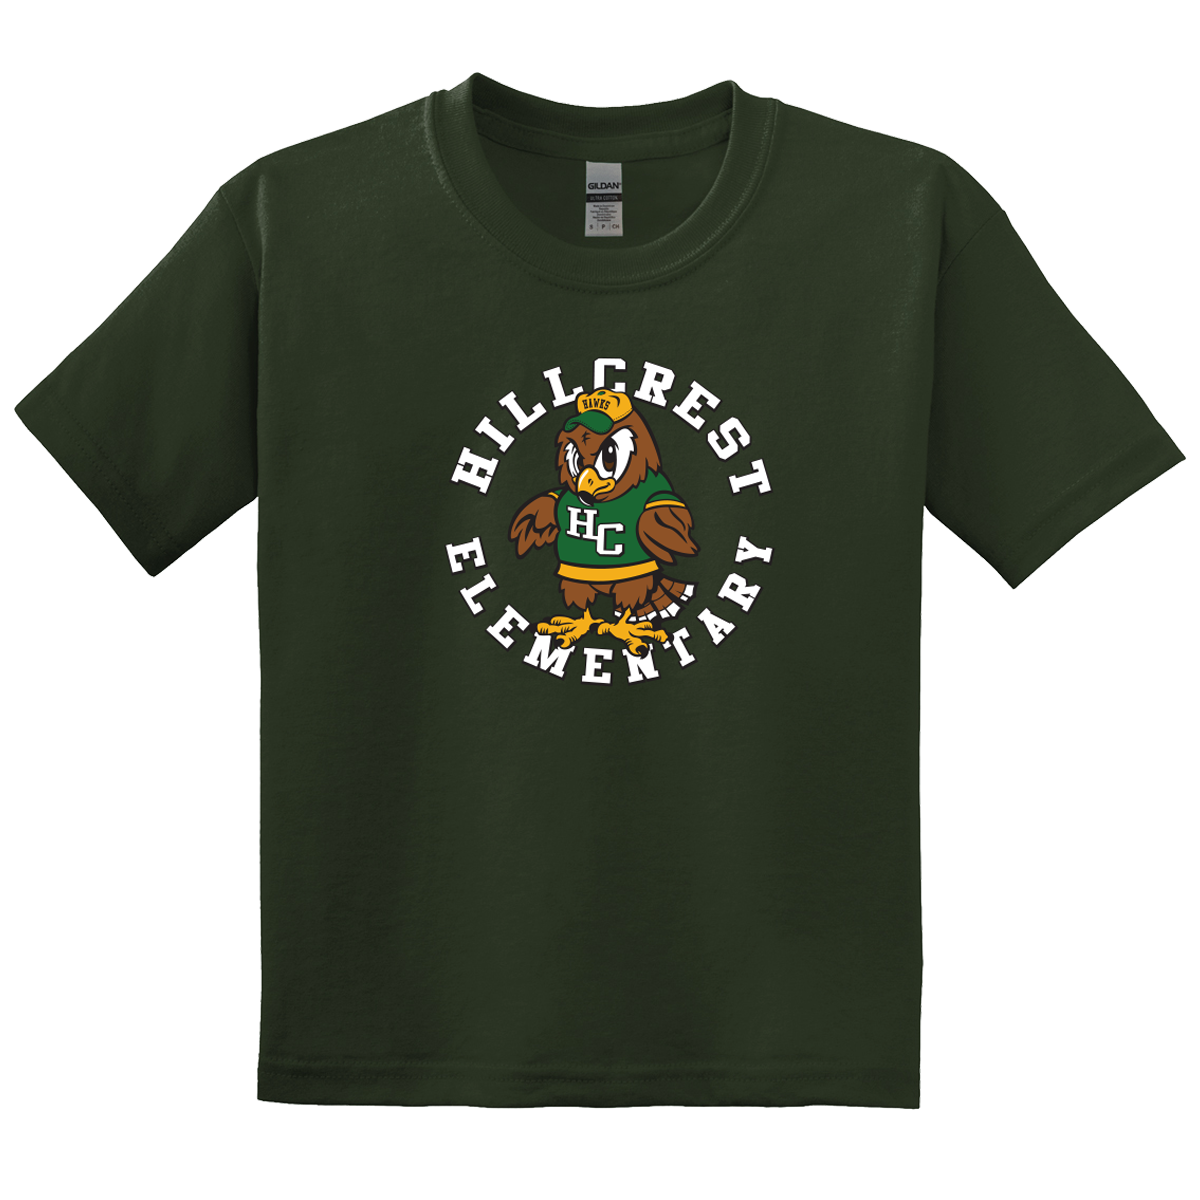 Hillcrest Basic Student T-Shirt - Forest Green